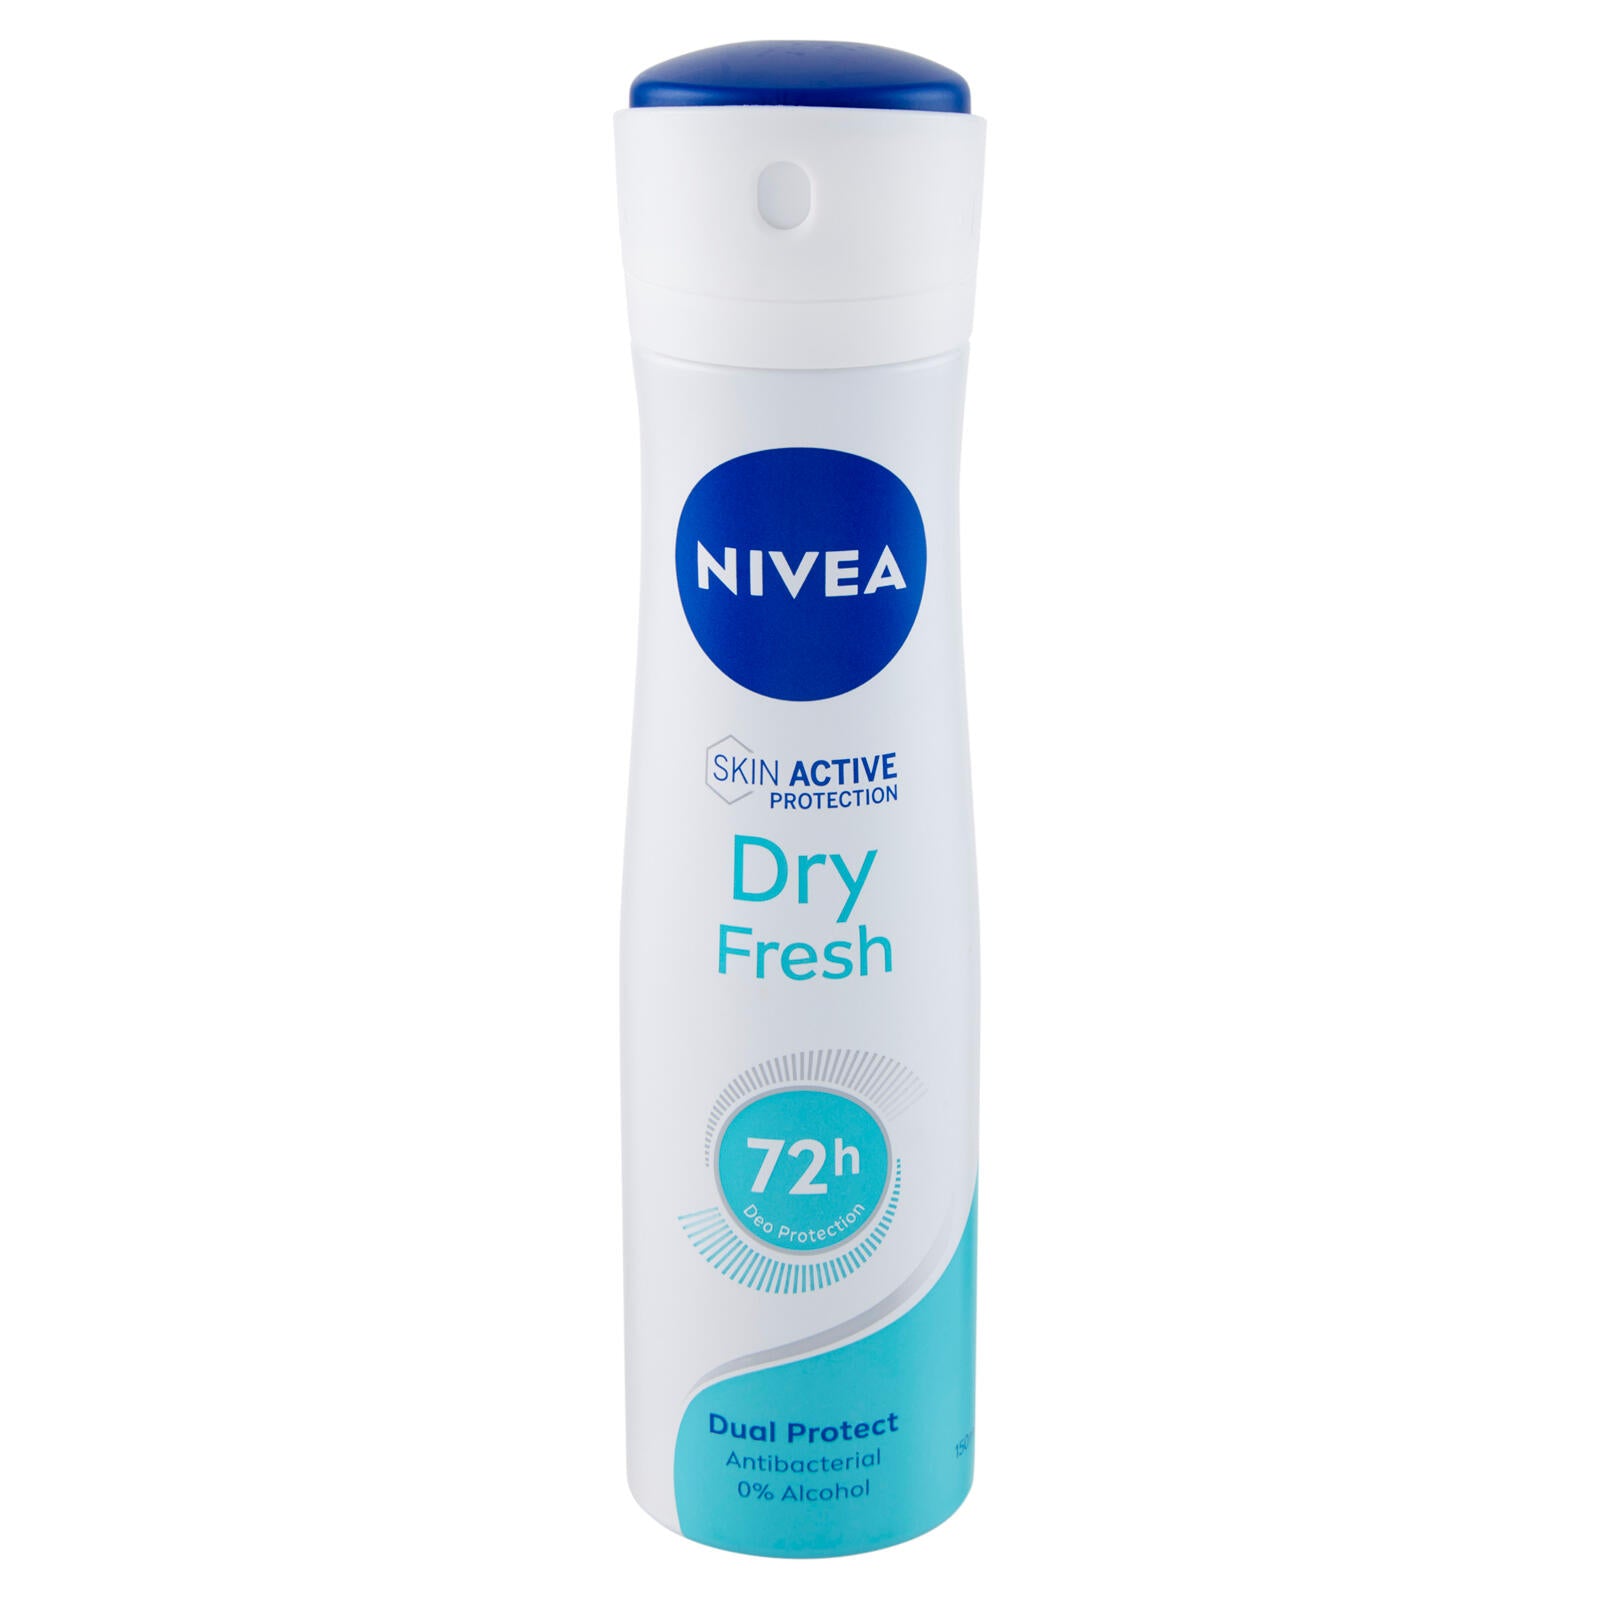 Nivea Dry Fresh Spray 150 ml